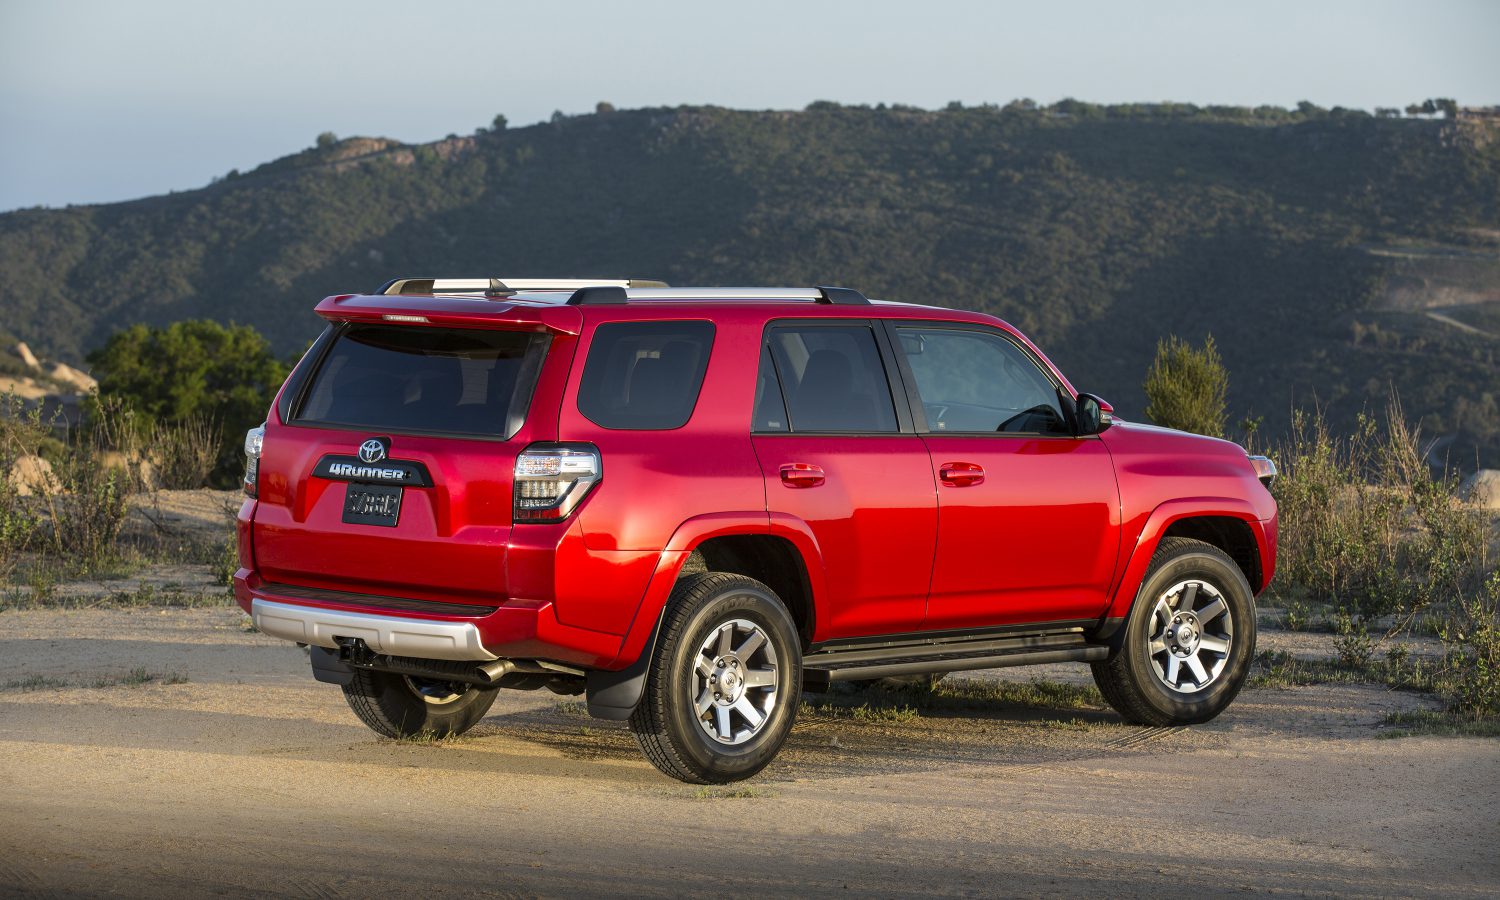 2015 Toyota 4Runner Product Information - Toyota USA Newsroom